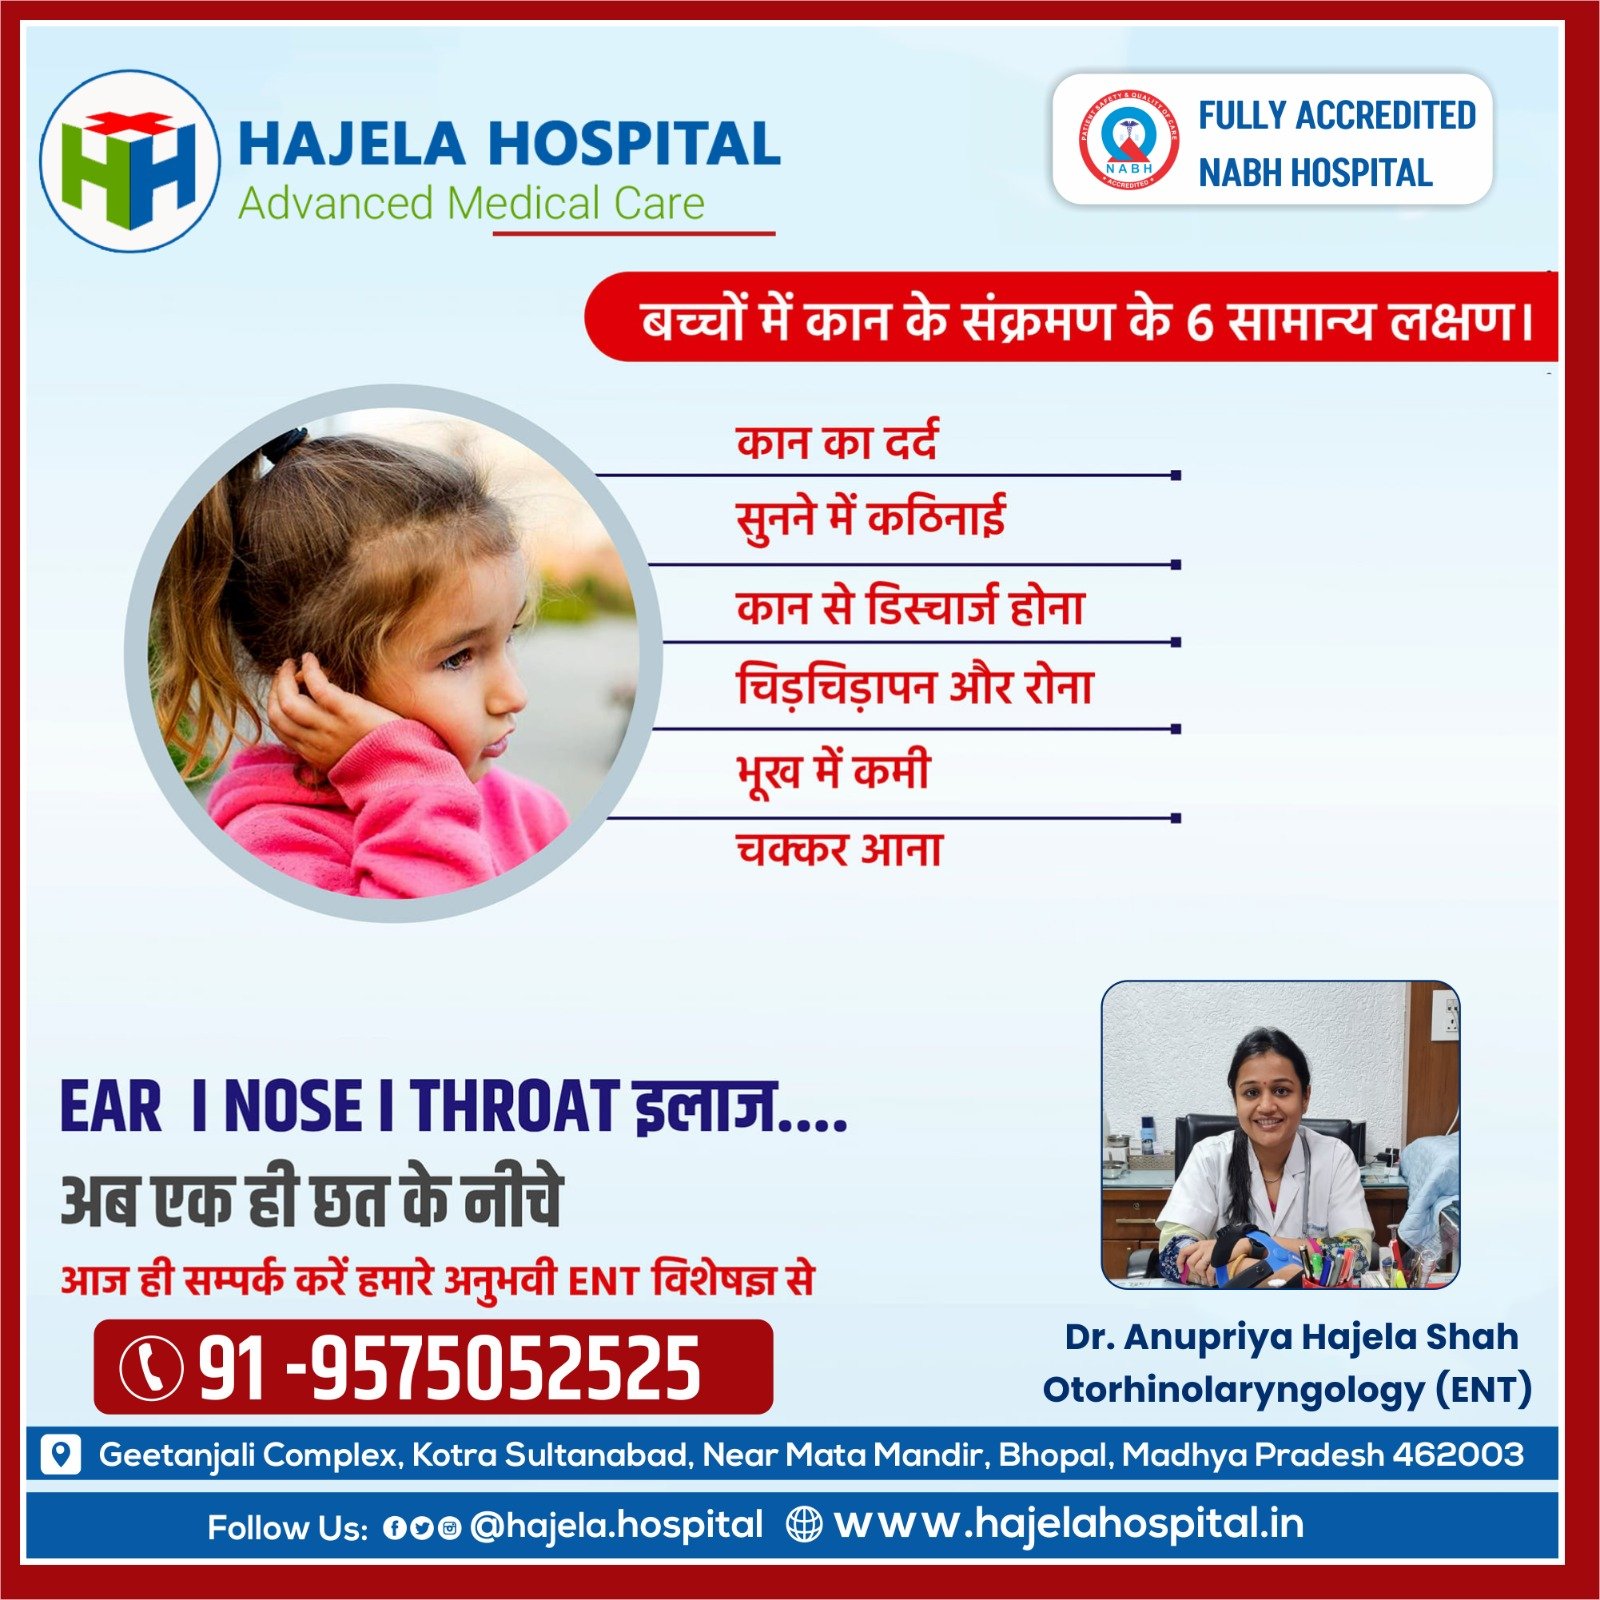 Best ear infection treatment in Bhopal | Hajela Hospital